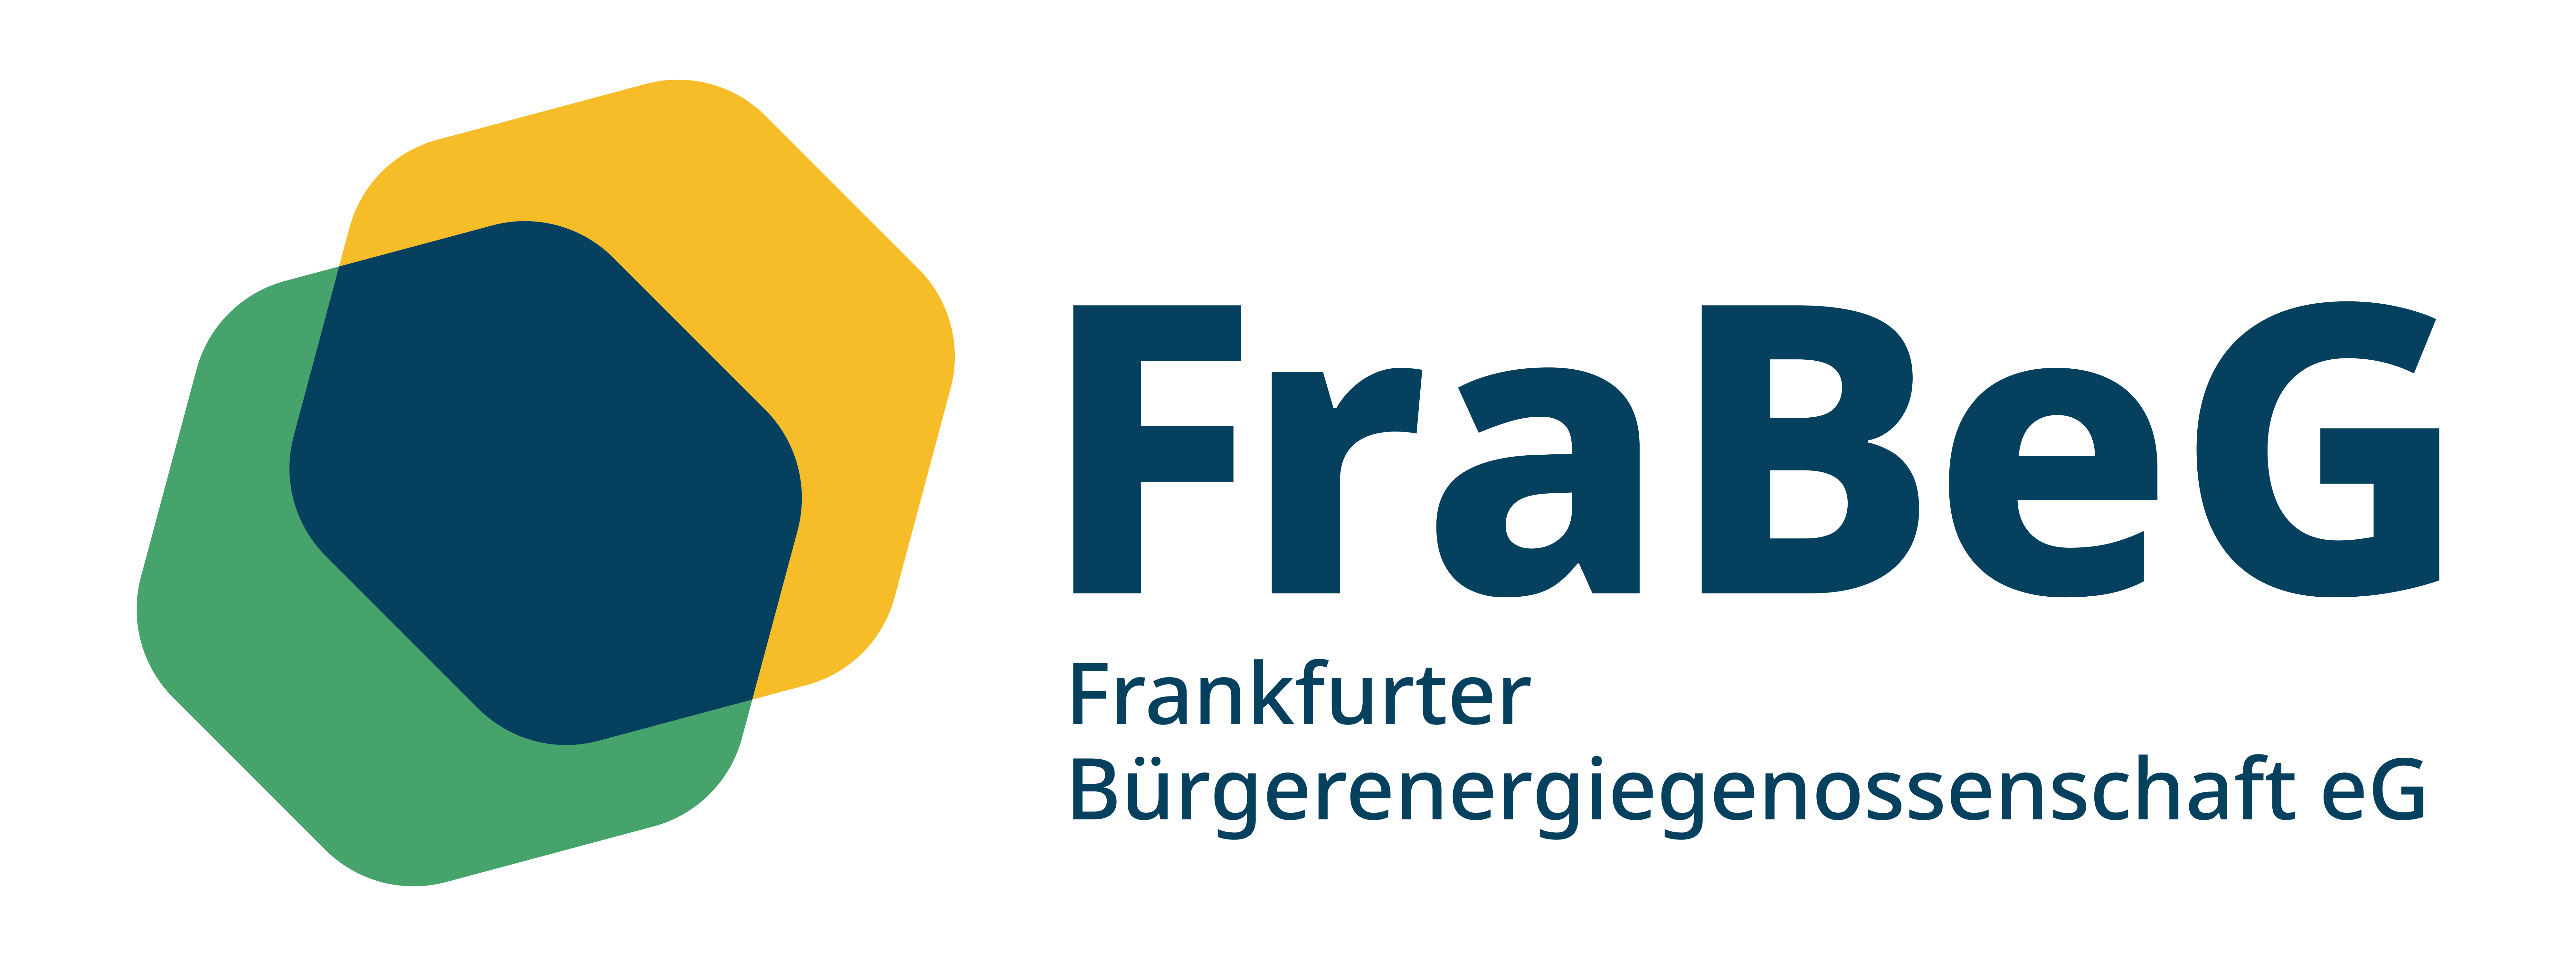 Frankfurter Bürgerenergiegenossenschaft eG